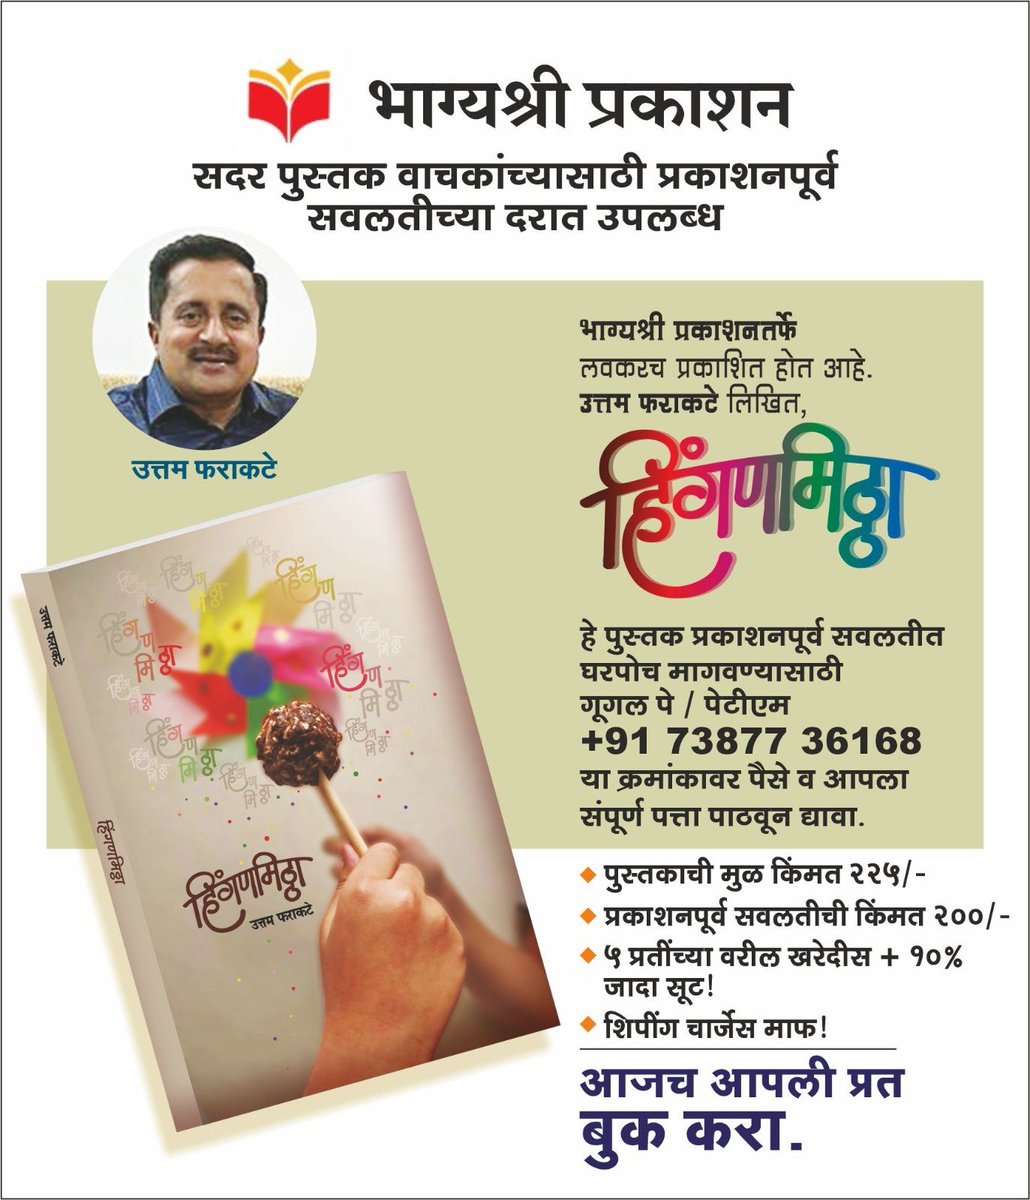 Thanks a lot for overwhelming support, love and response to my first ever book publication “ Hinganmittha “ 

Get the copy contact Vikram : +91 7796-499198

#Satejdpatil 
#Pudhari 
#Sakal
#Lokmat
#Tarunbharat 
#Punyanagari
#Maharashtratimes
#Bnews 
#SPN 
#Book